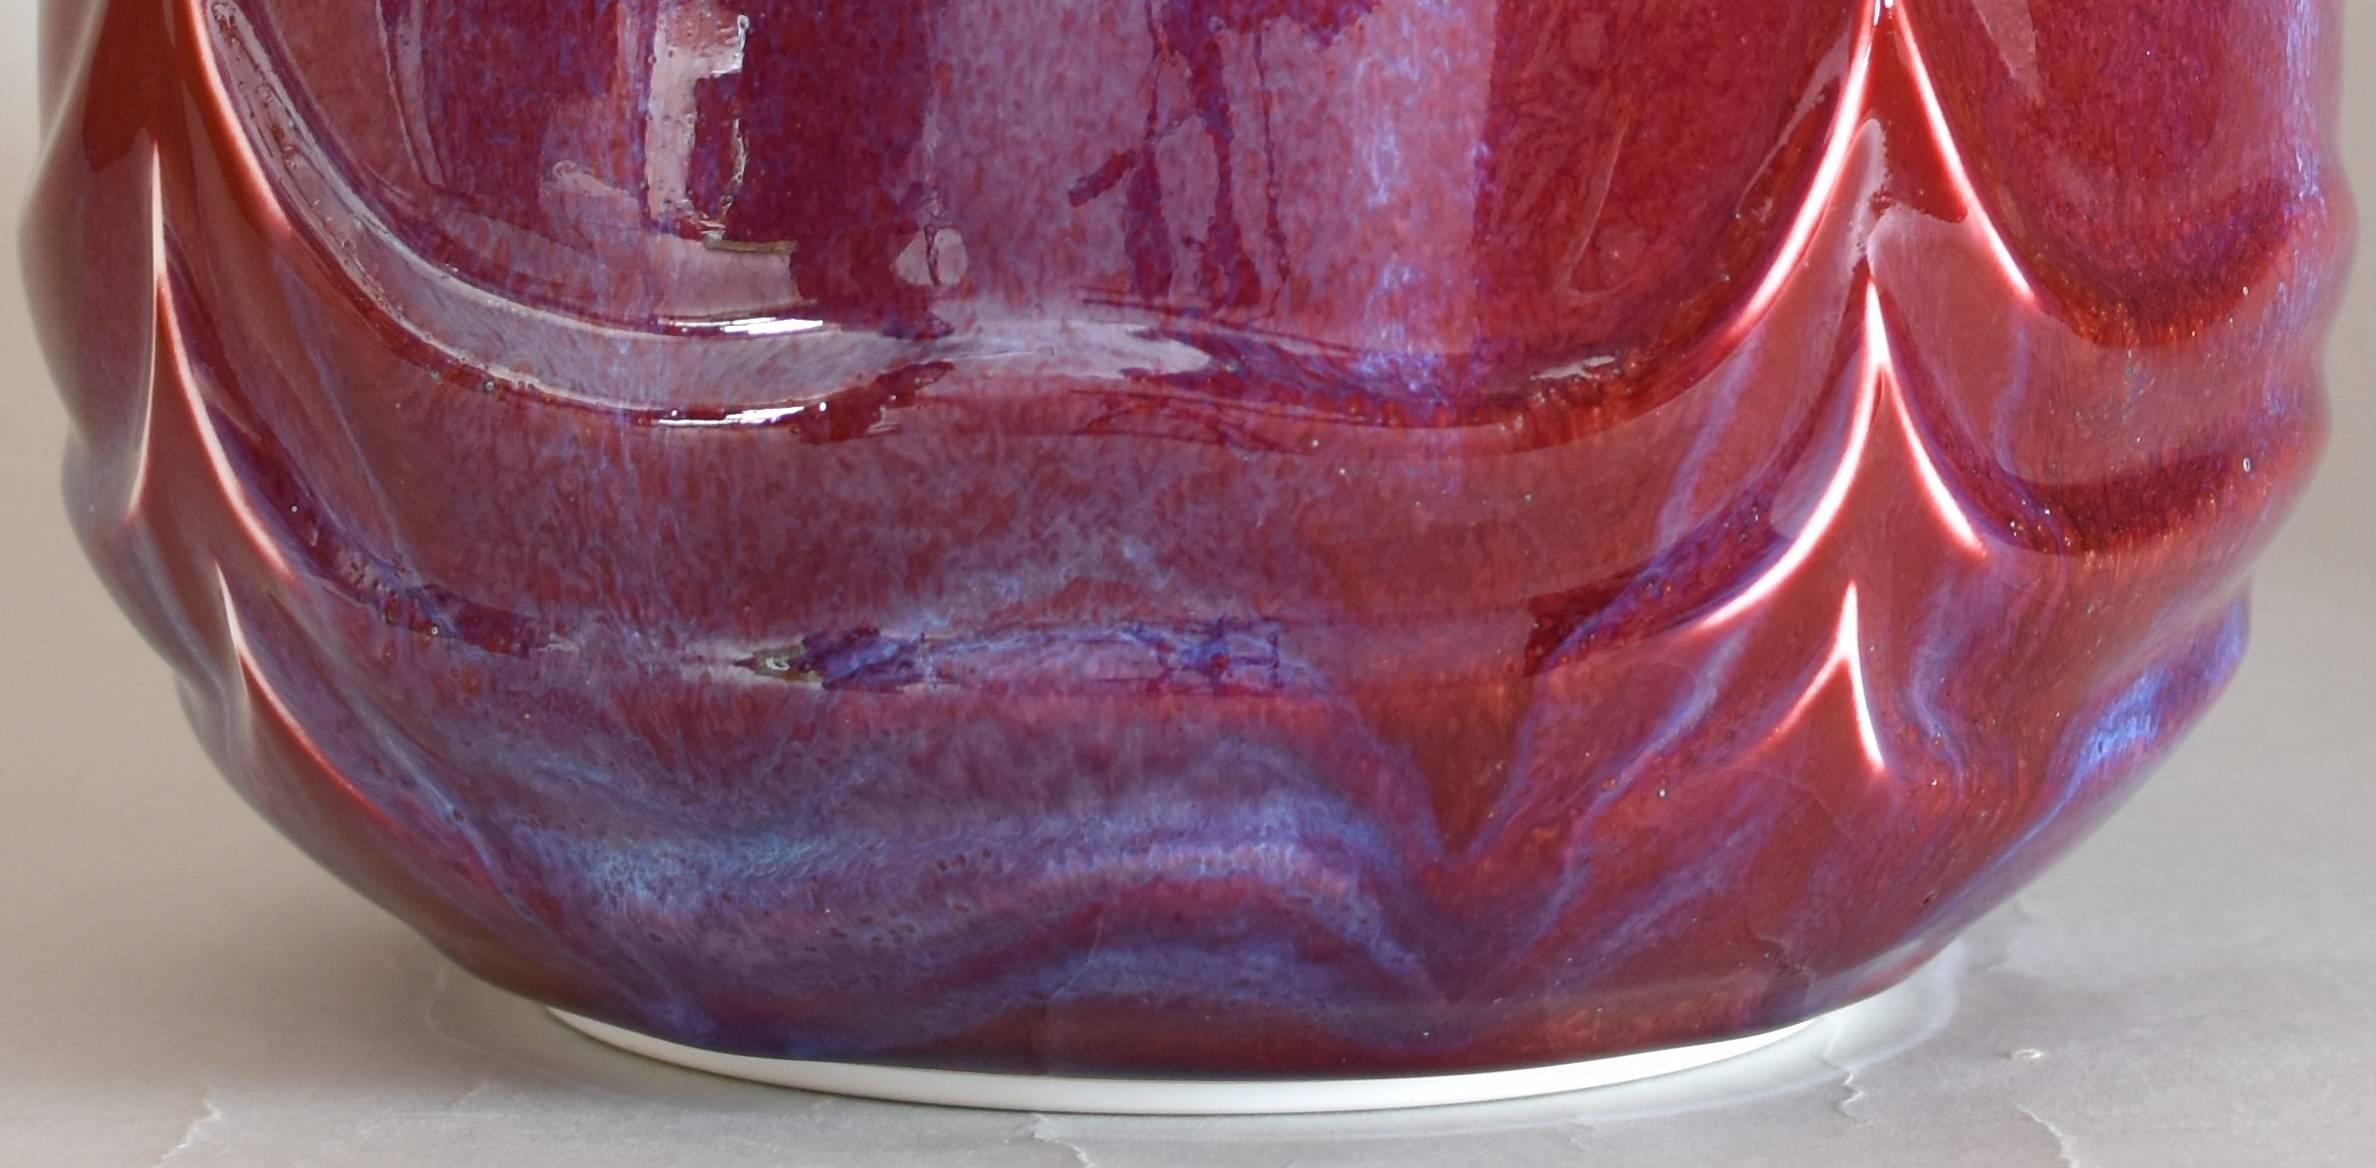 Contemporary  Decorative Glazed Red Decorative Porcelain Vase by Japanese Master Artist